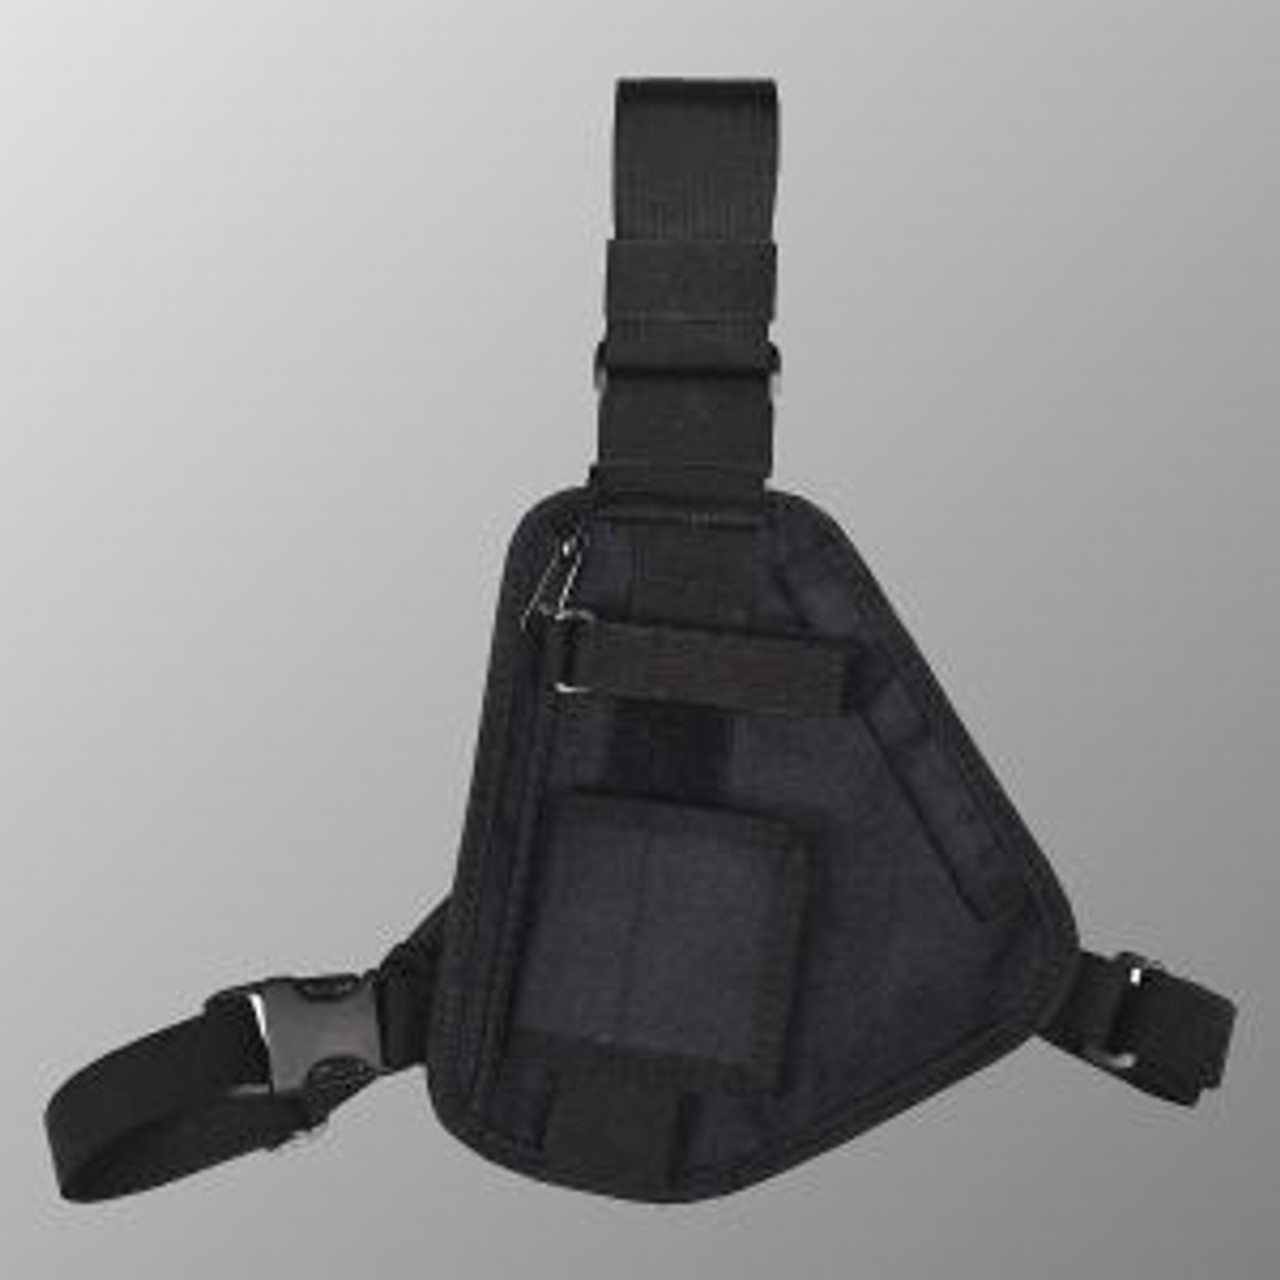 Motorola SL7000 3-Point Chest Harness - Black